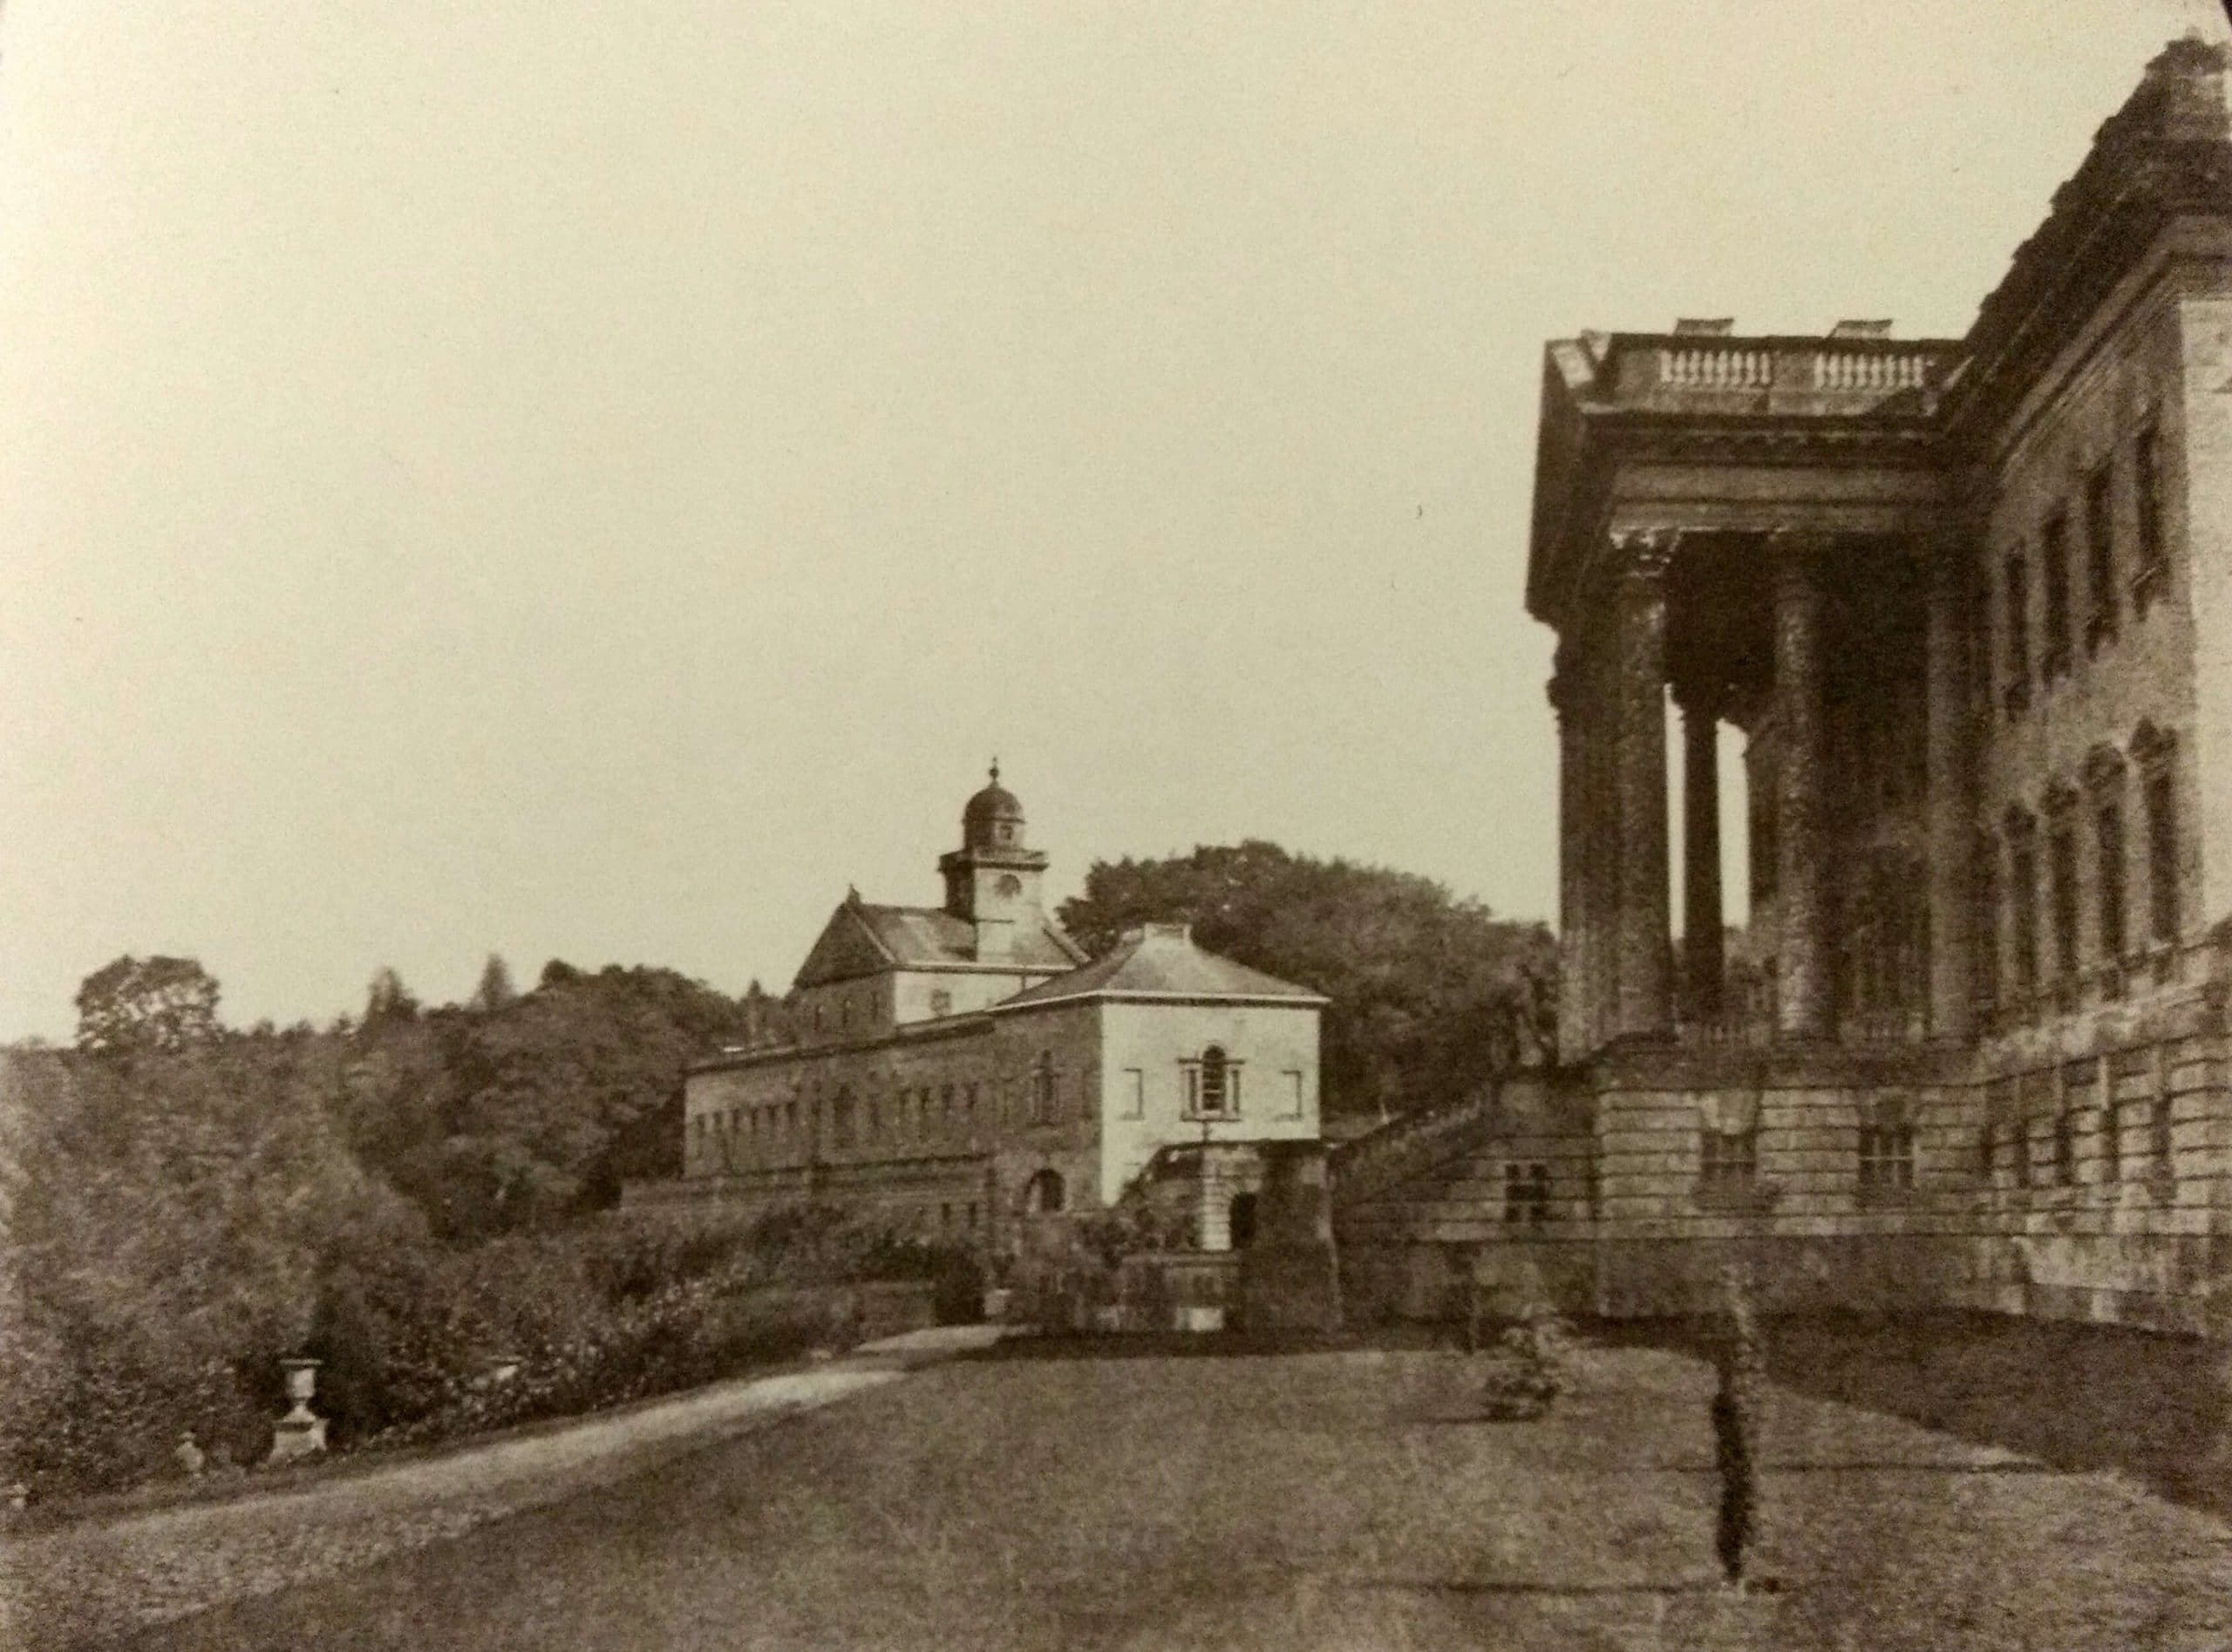 prior-park-mansion-about-1855-rev-francis-lockey-1796-1869